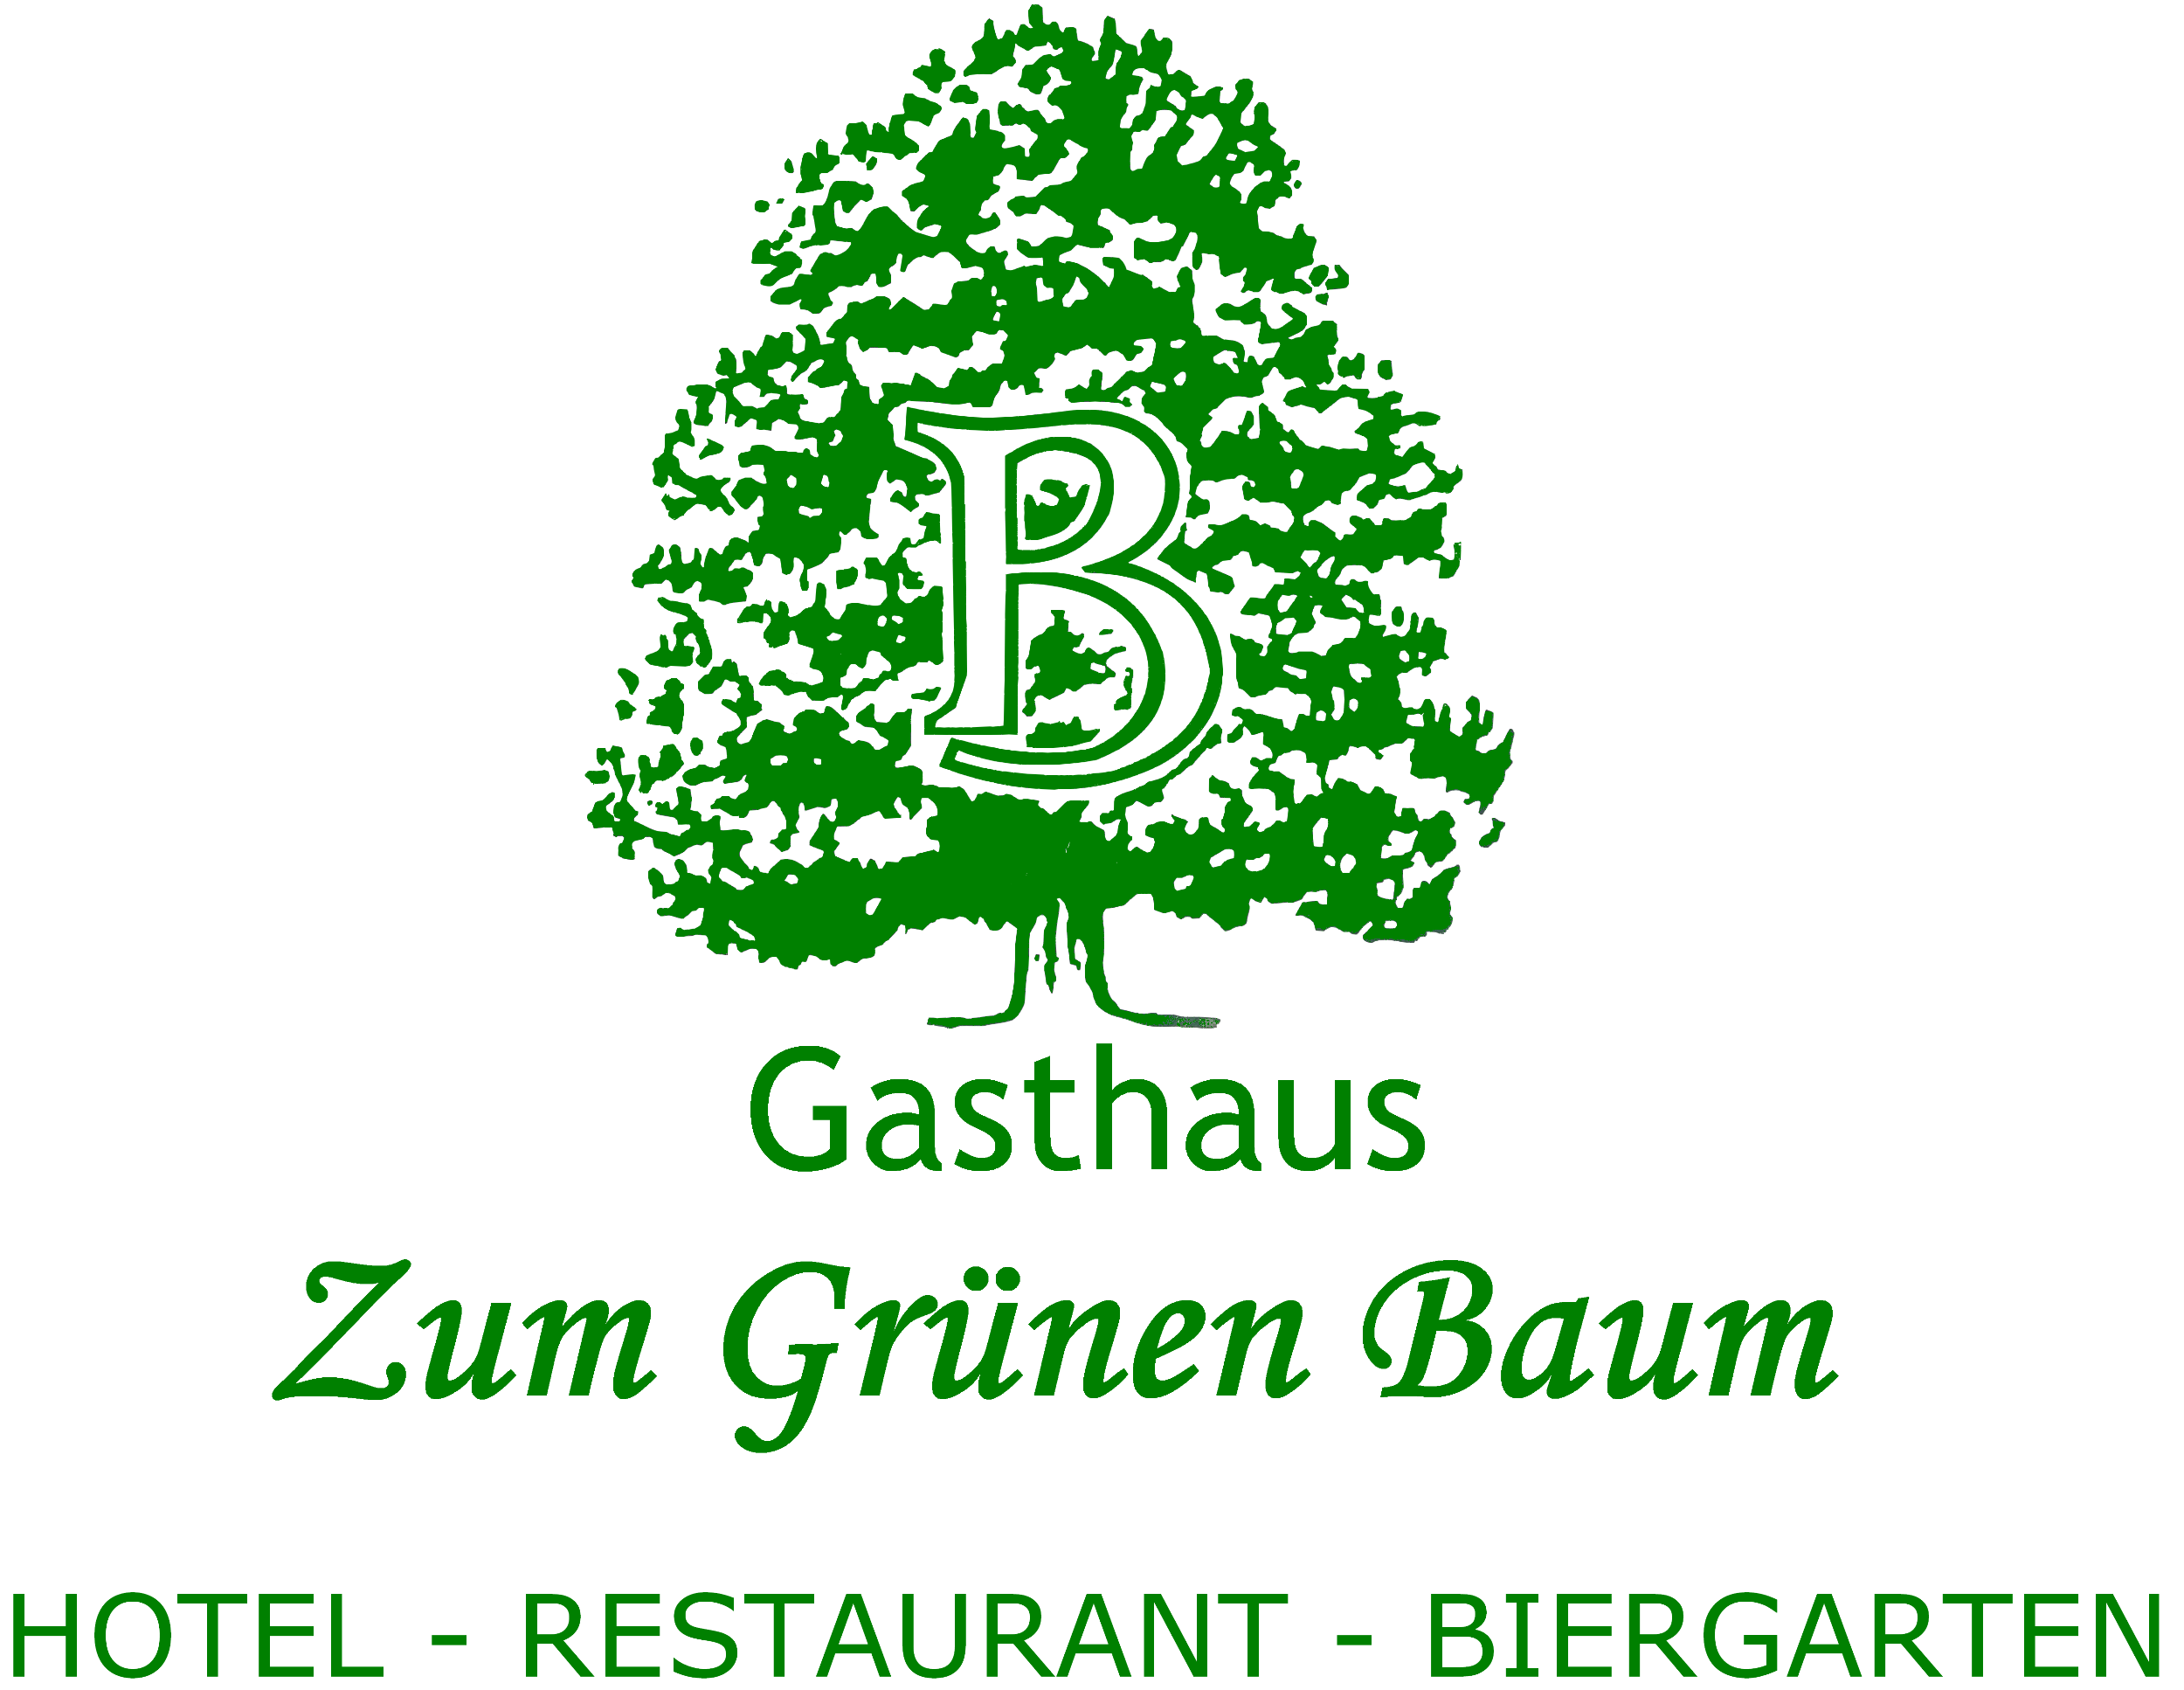 Gasthaus "Zum grünen Baum"